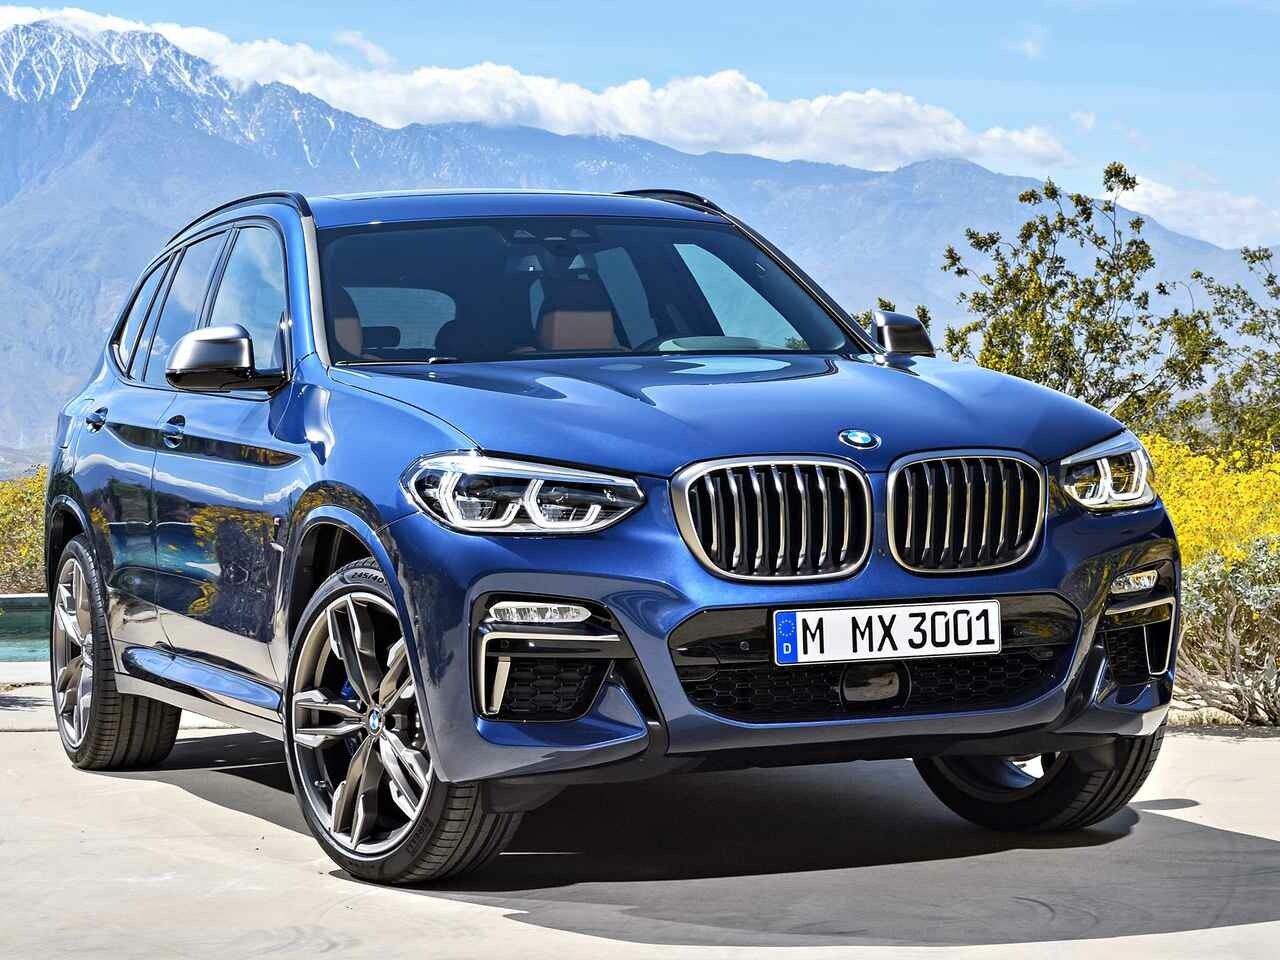 BMWがX3 M40iを追加。最高出力387psのM40iか、最大トルク680NmのM40dか、悩ましい選択！